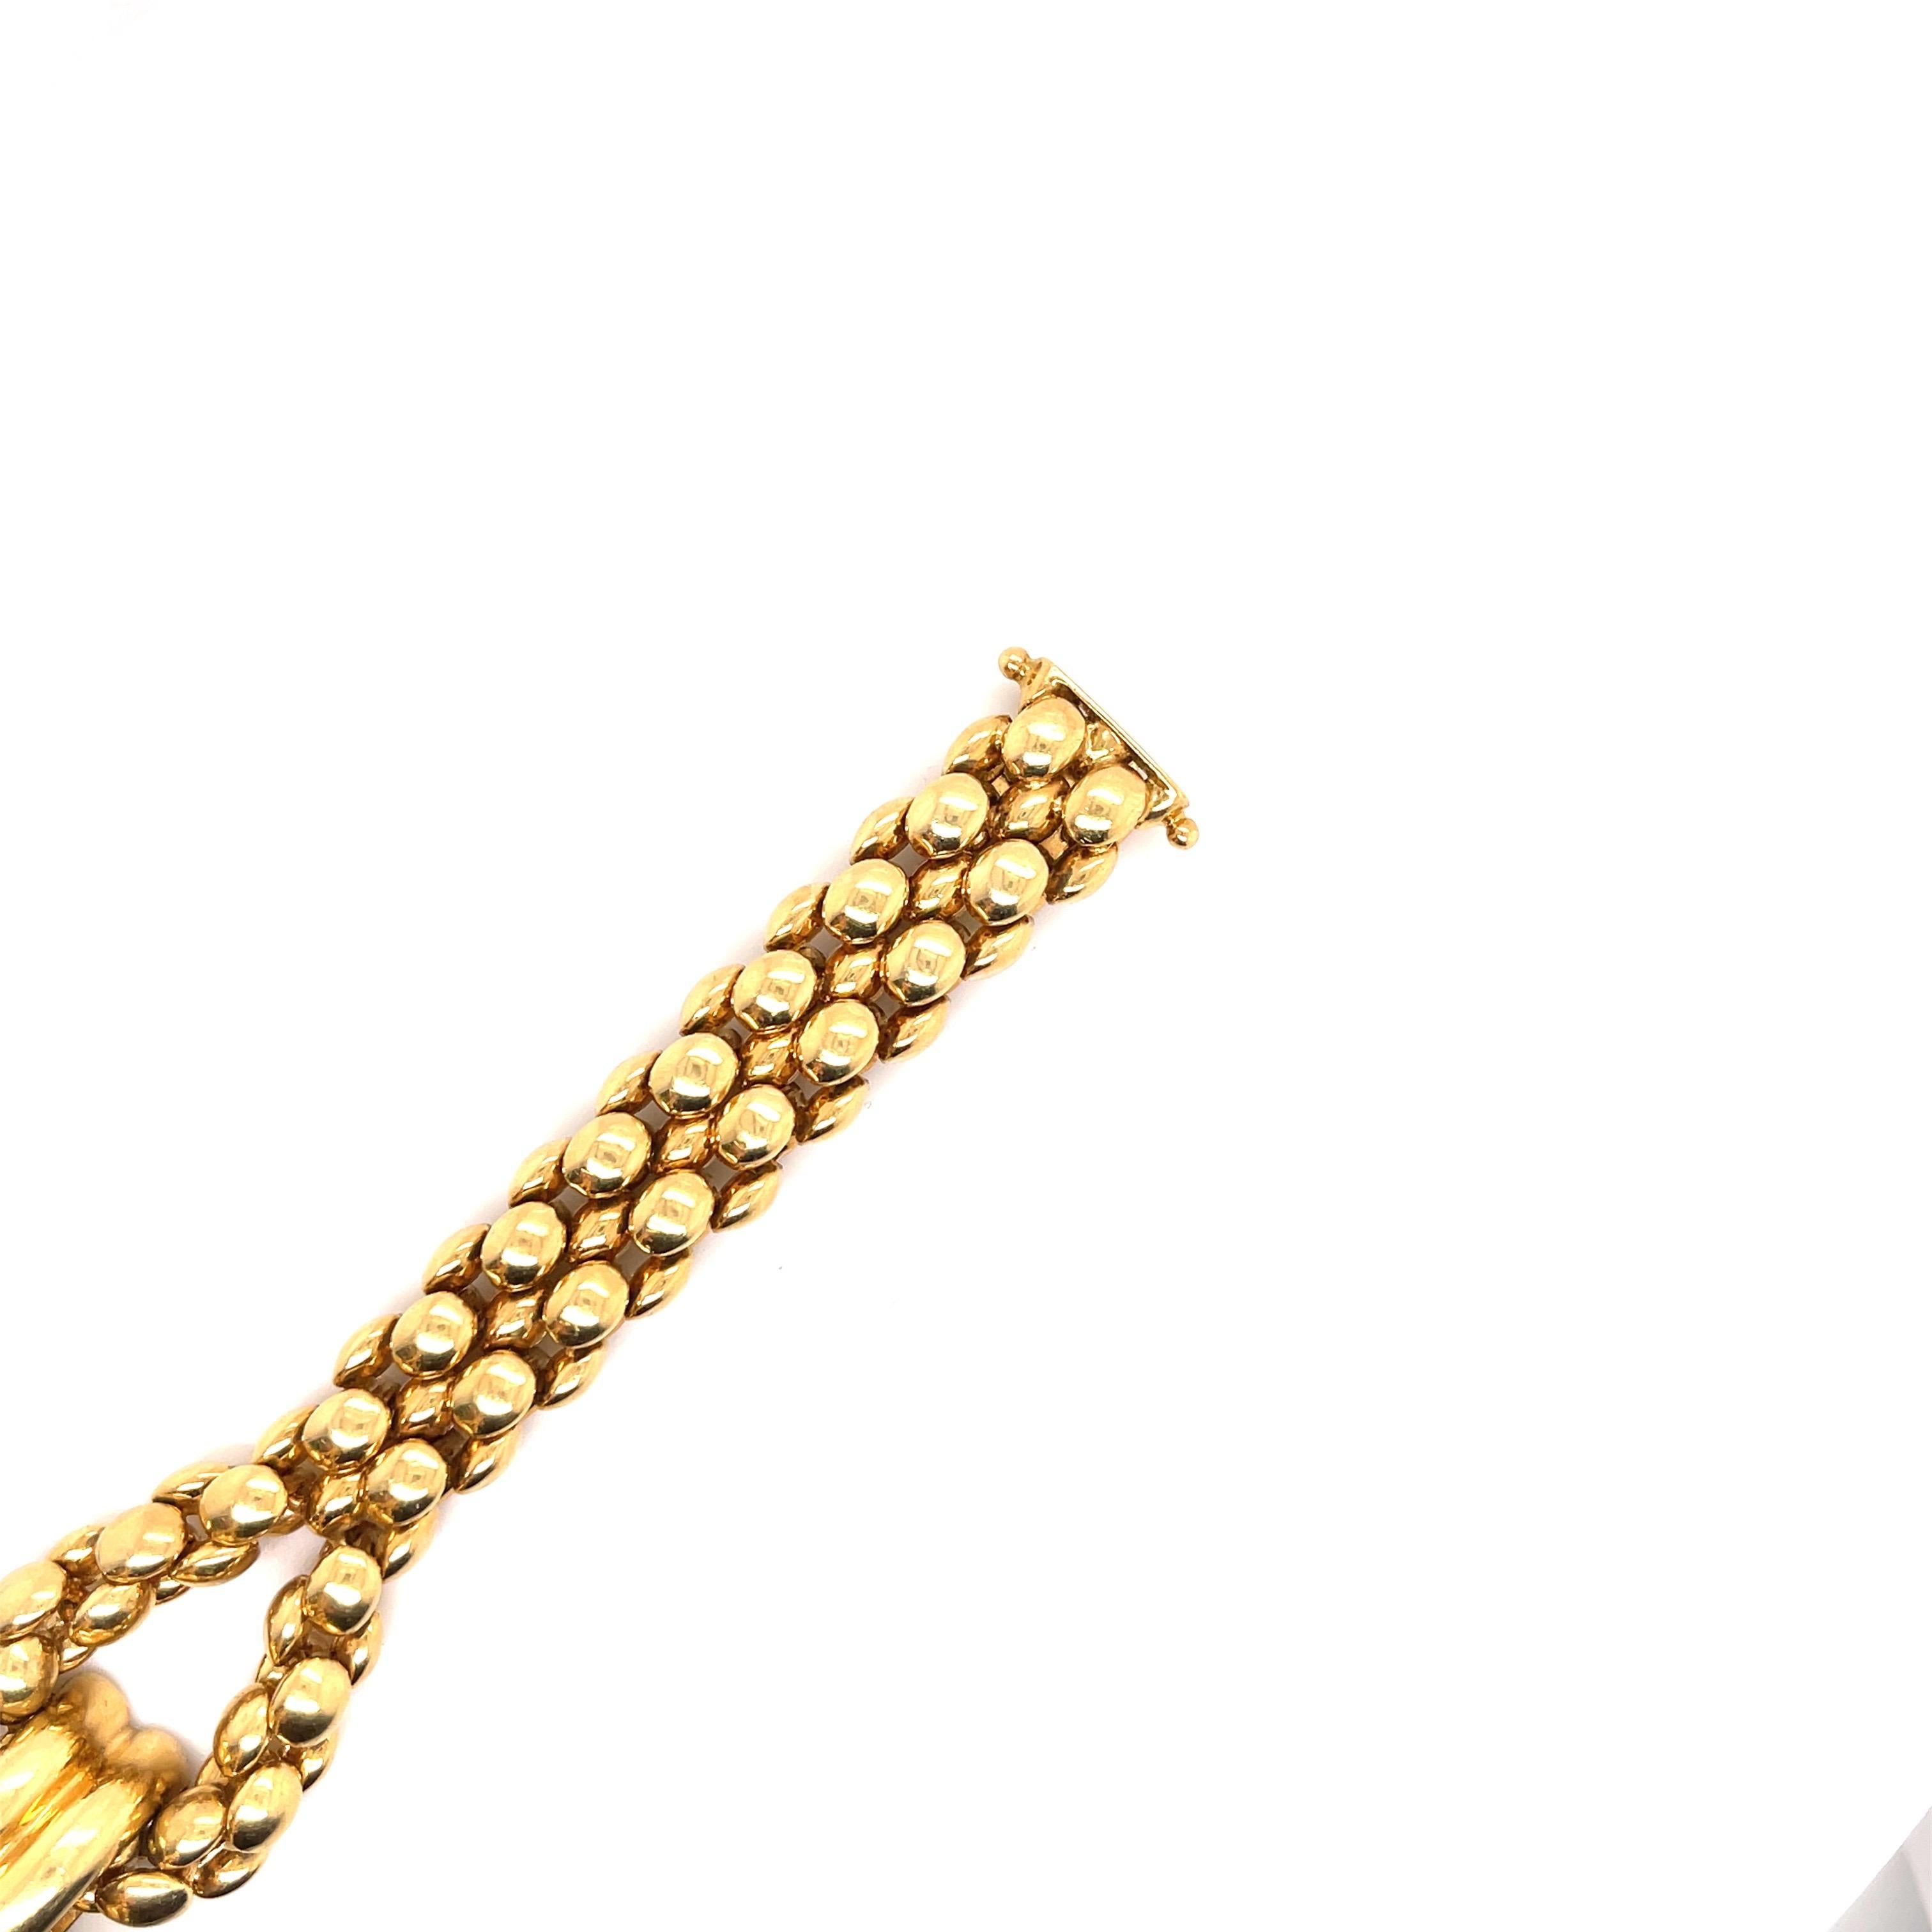 Marine Style Knot on popcorn Chain Gold bracelet
Stamped MJC
